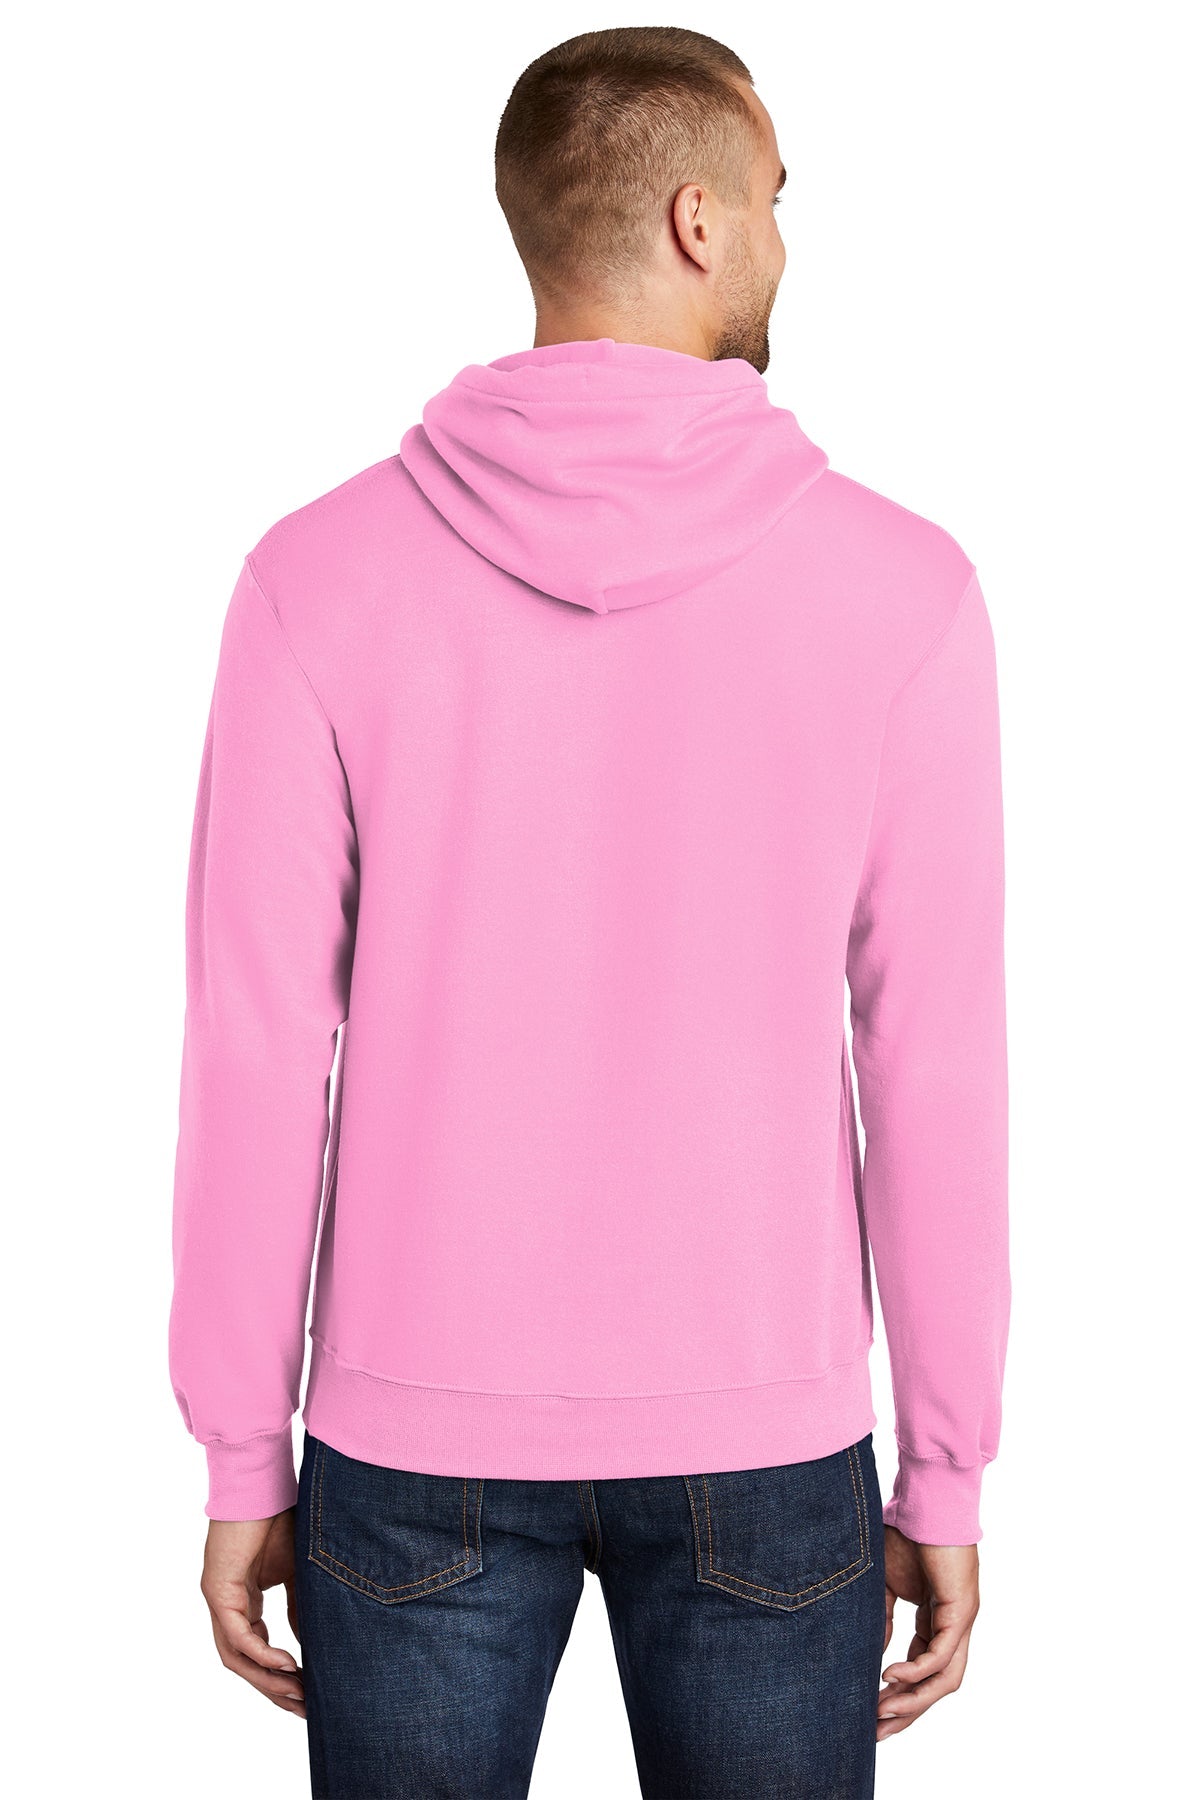 port & company_pc78h _candy pink_company_logo_sweatshirts